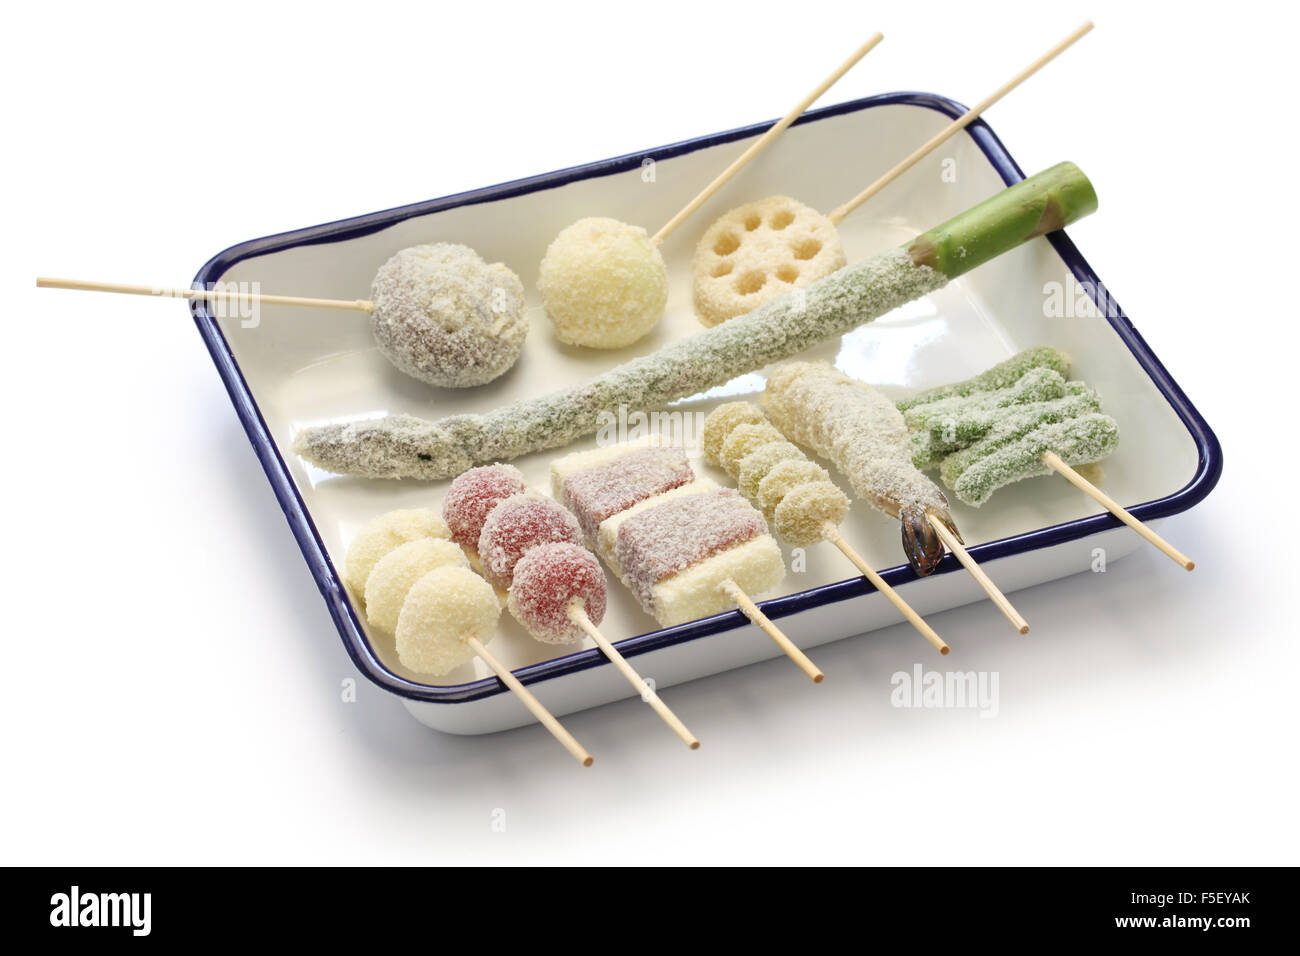 kushiage(deep fried food on a stick),japanese food,cooking process Stock Photo